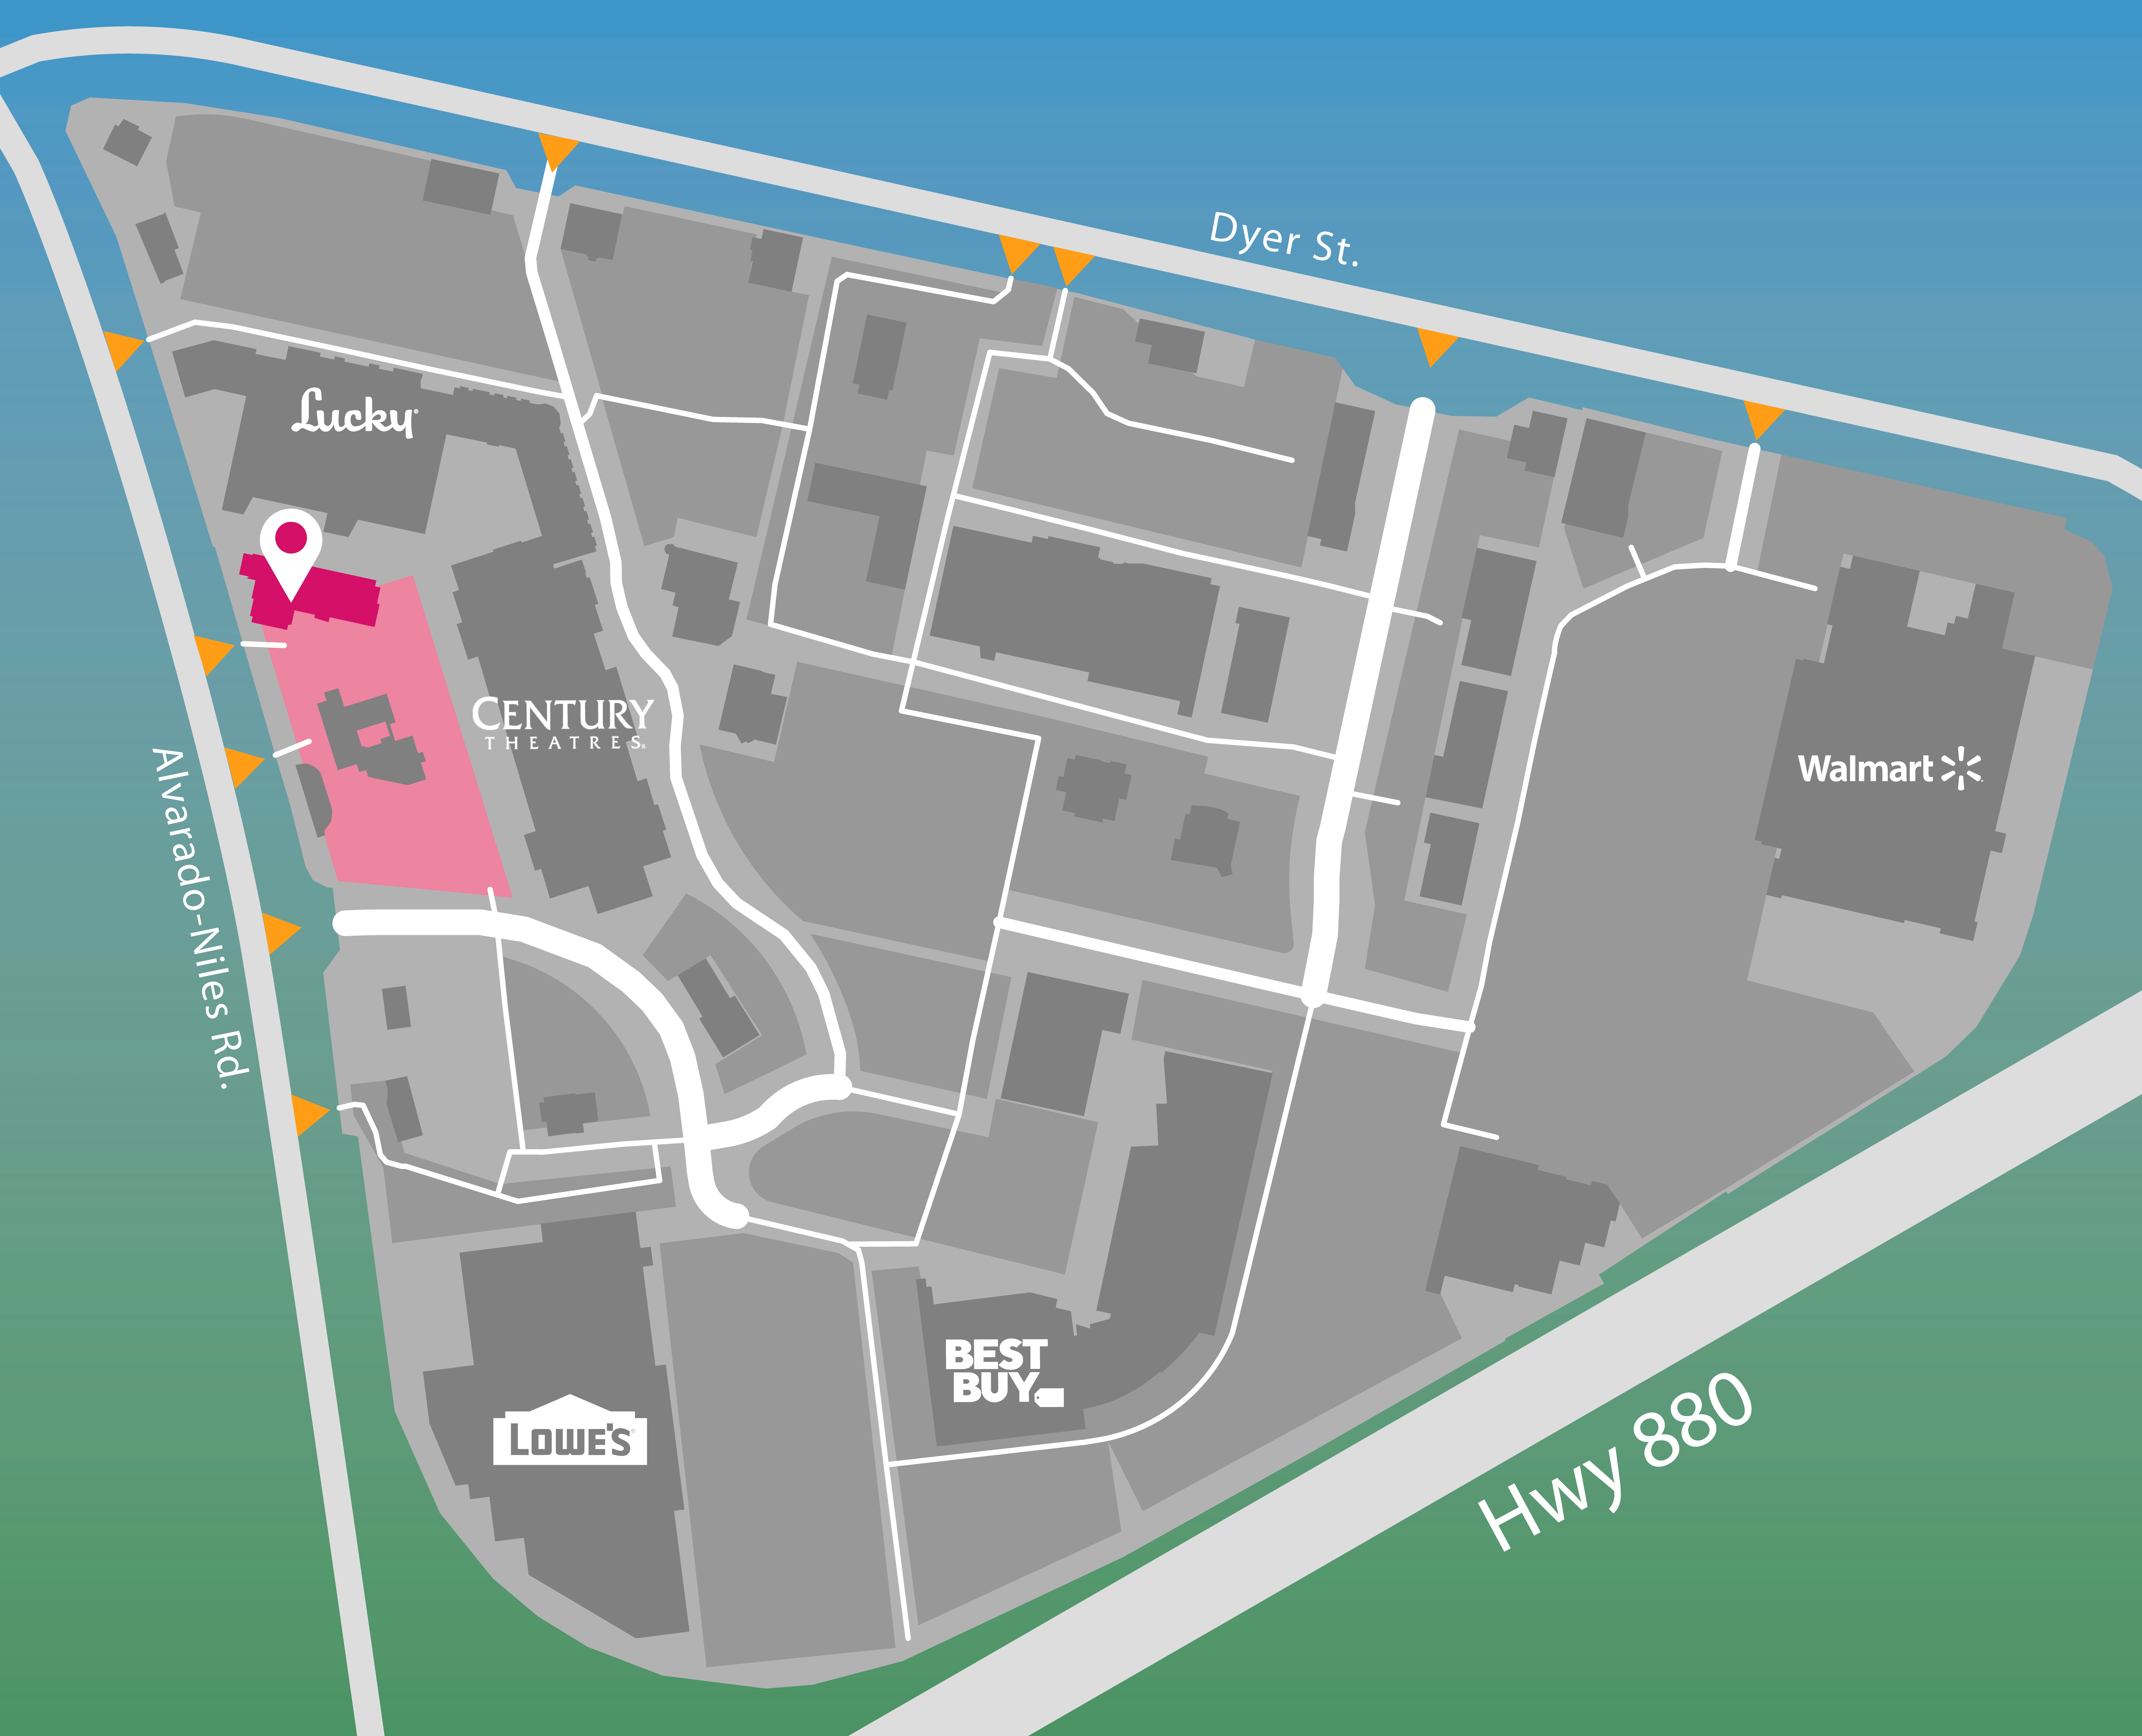 Parking map of Hampton Inn.